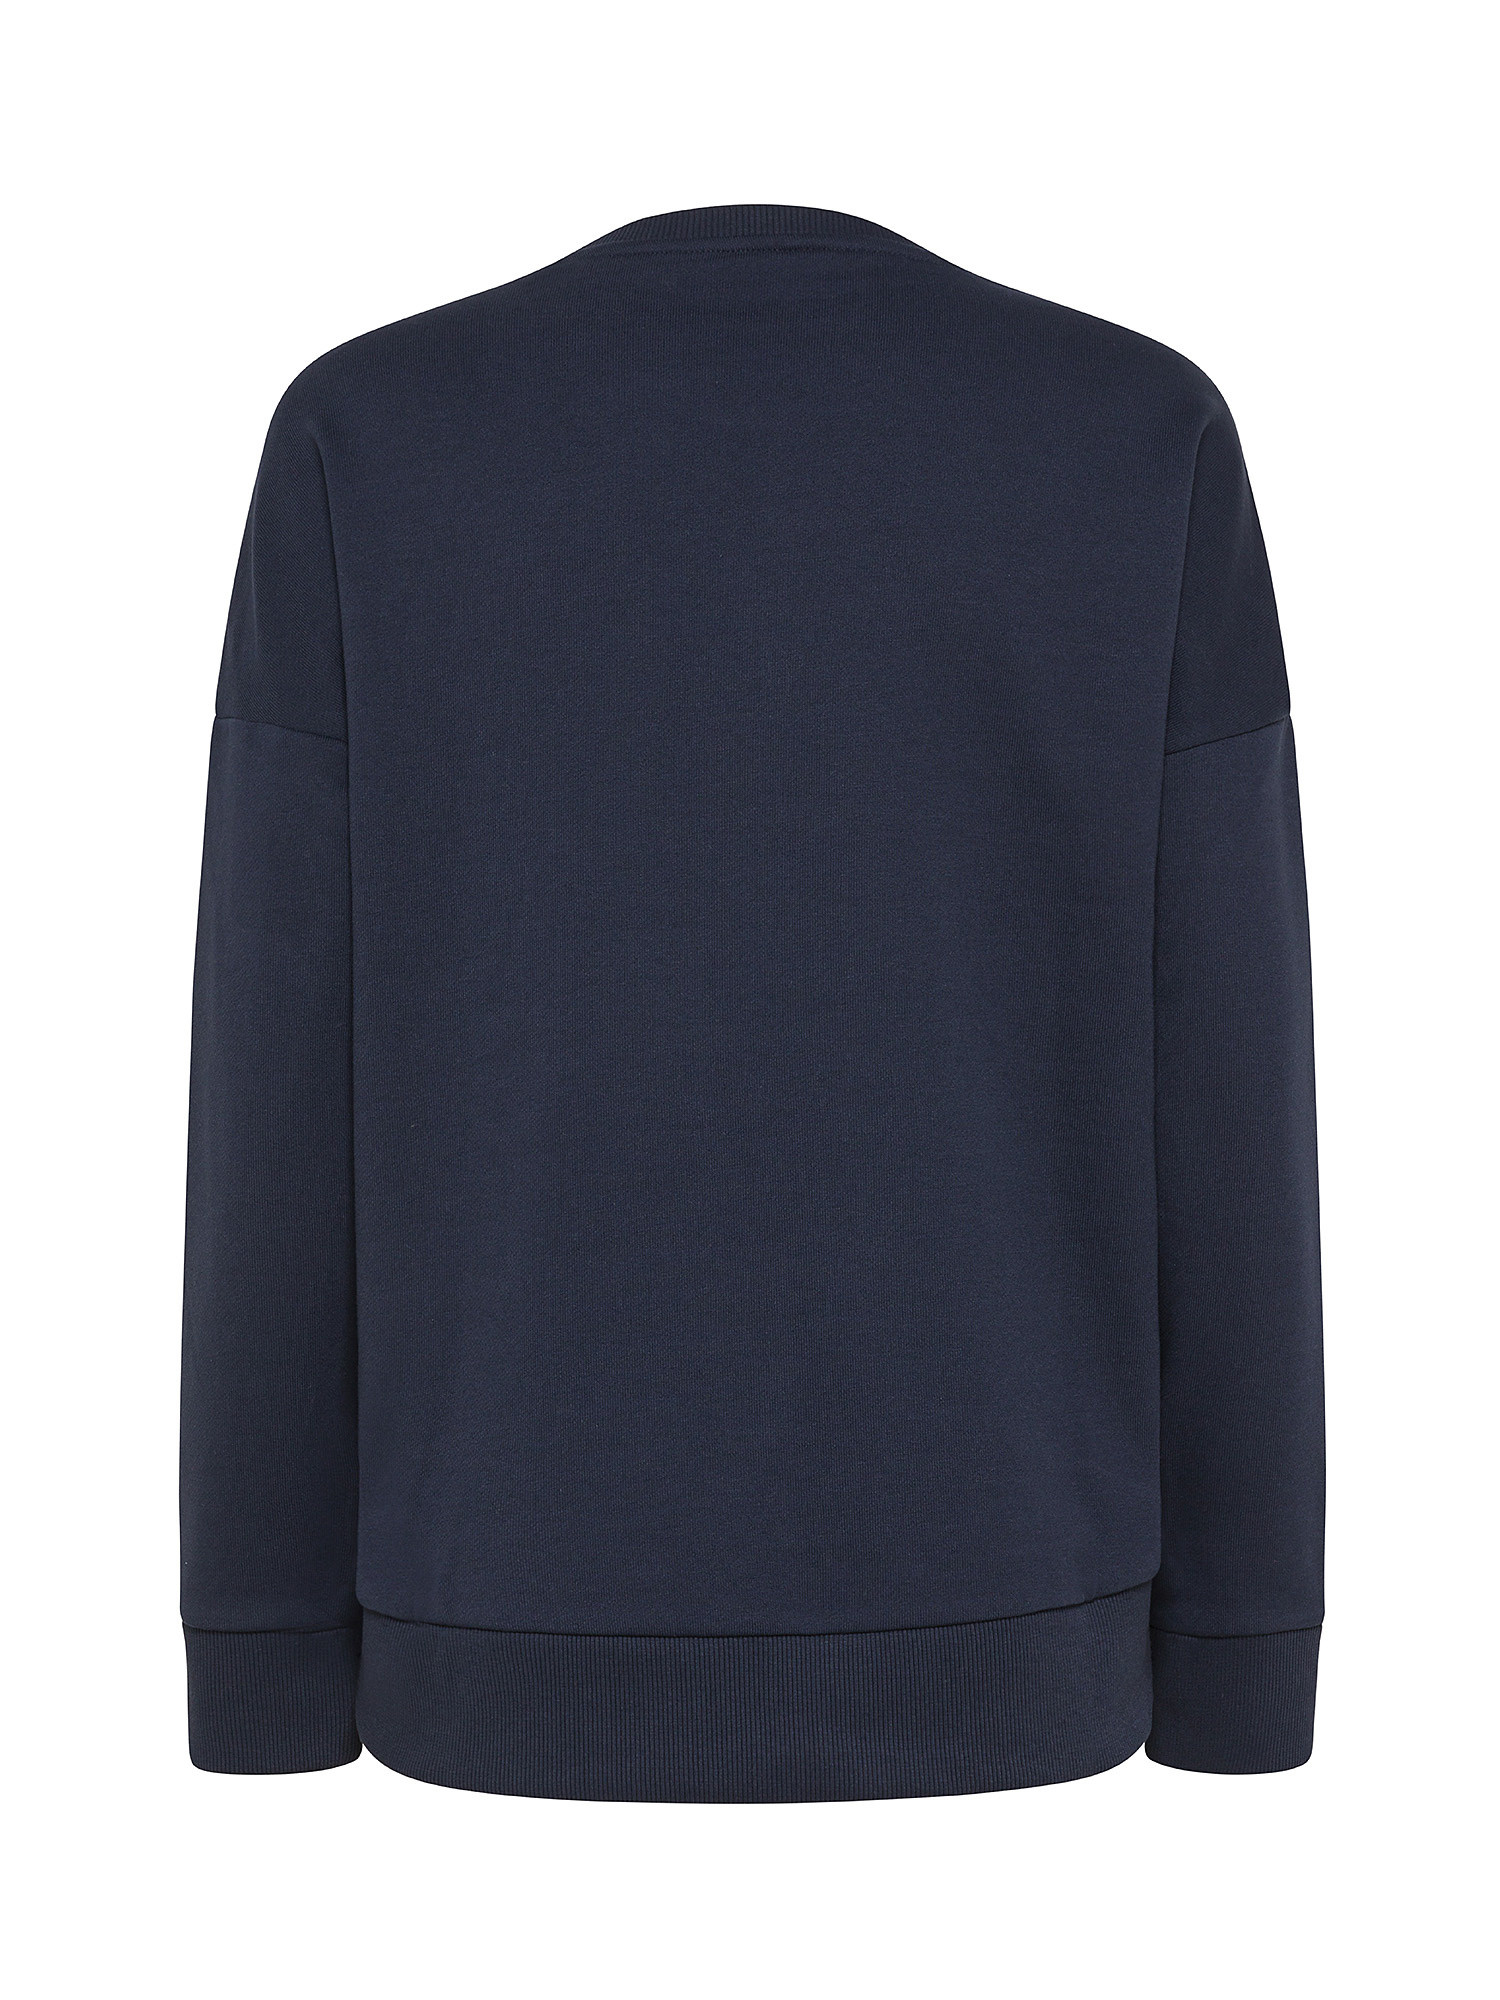 Armani Exchange - Sweatshirt with logo, Dark Blue, large image number 1